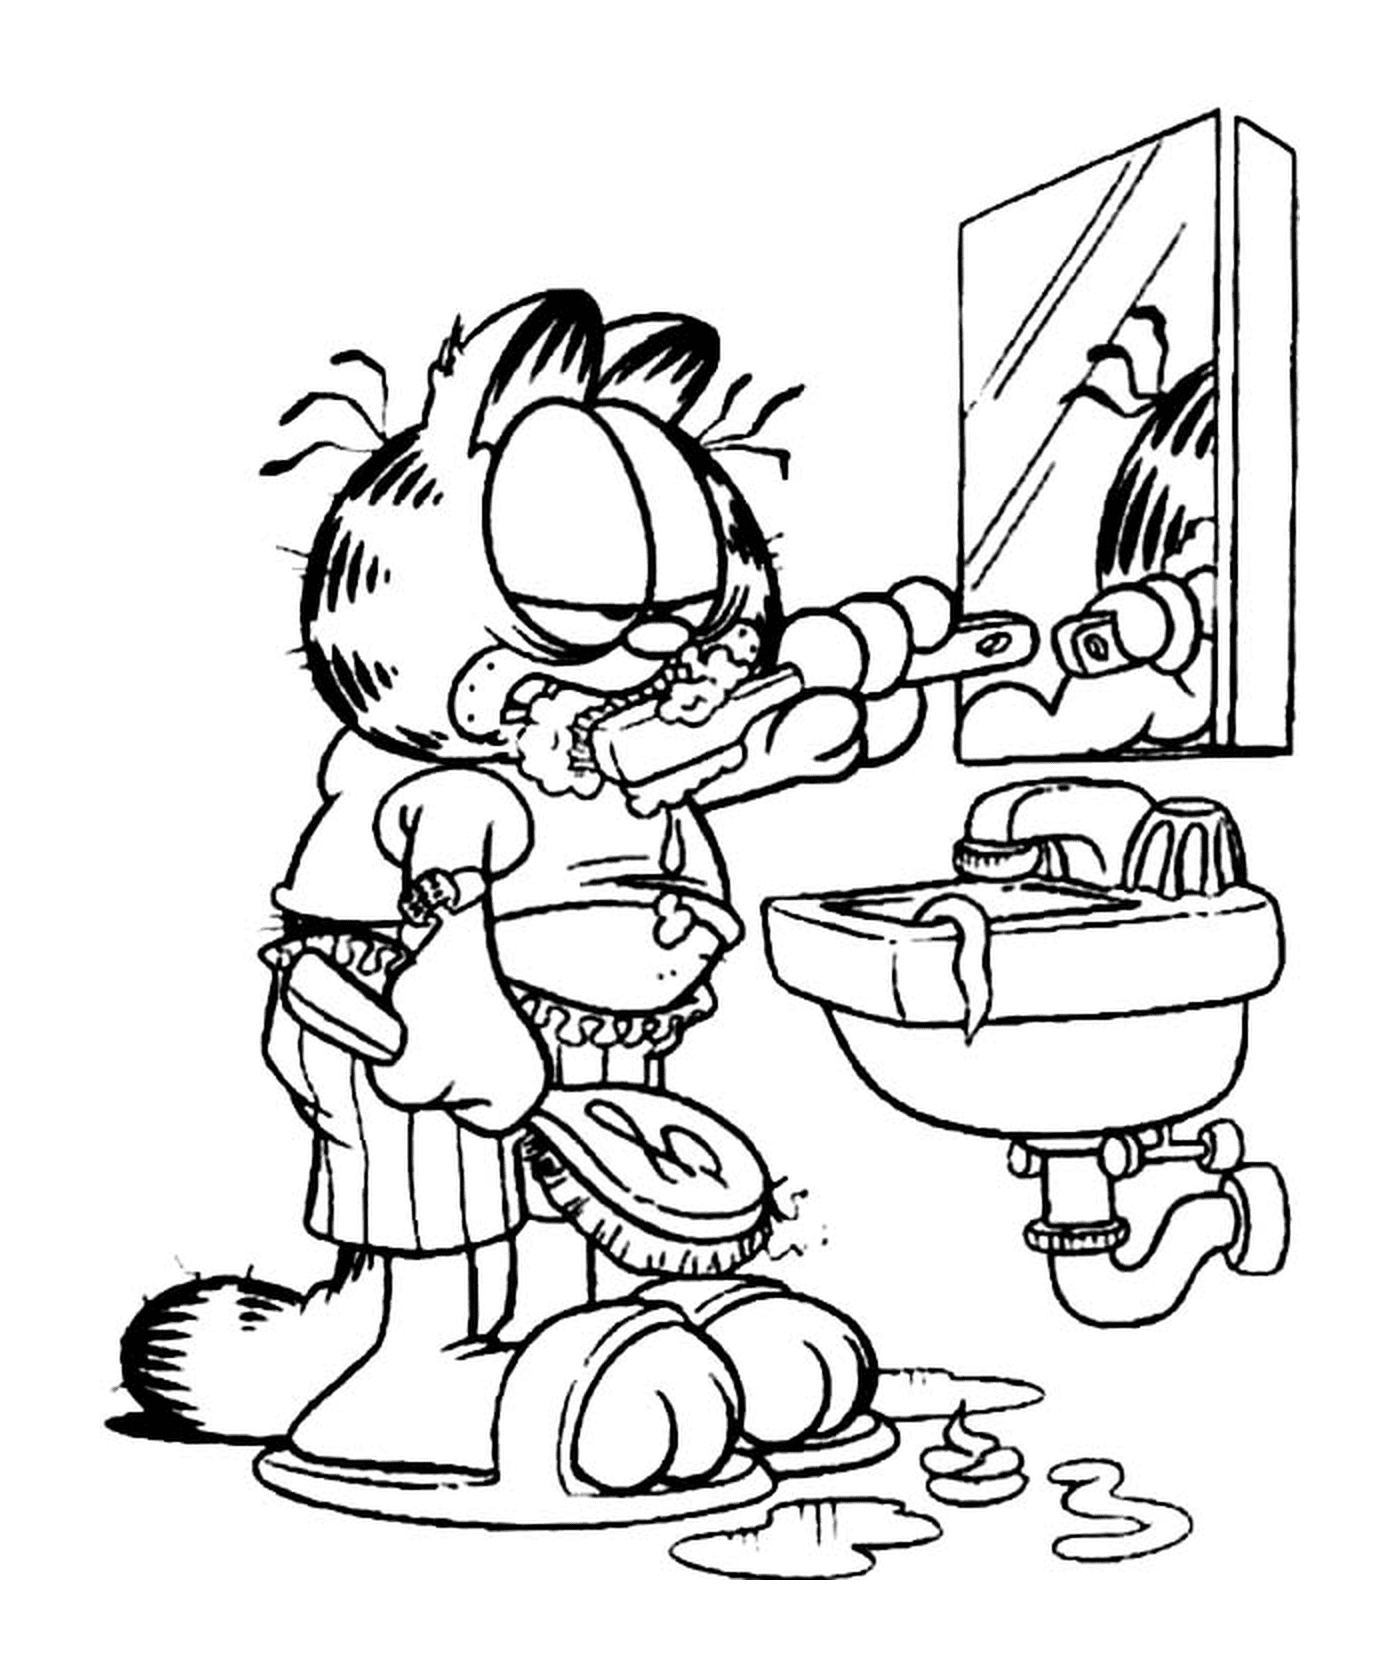  Garfield si lava i denti 